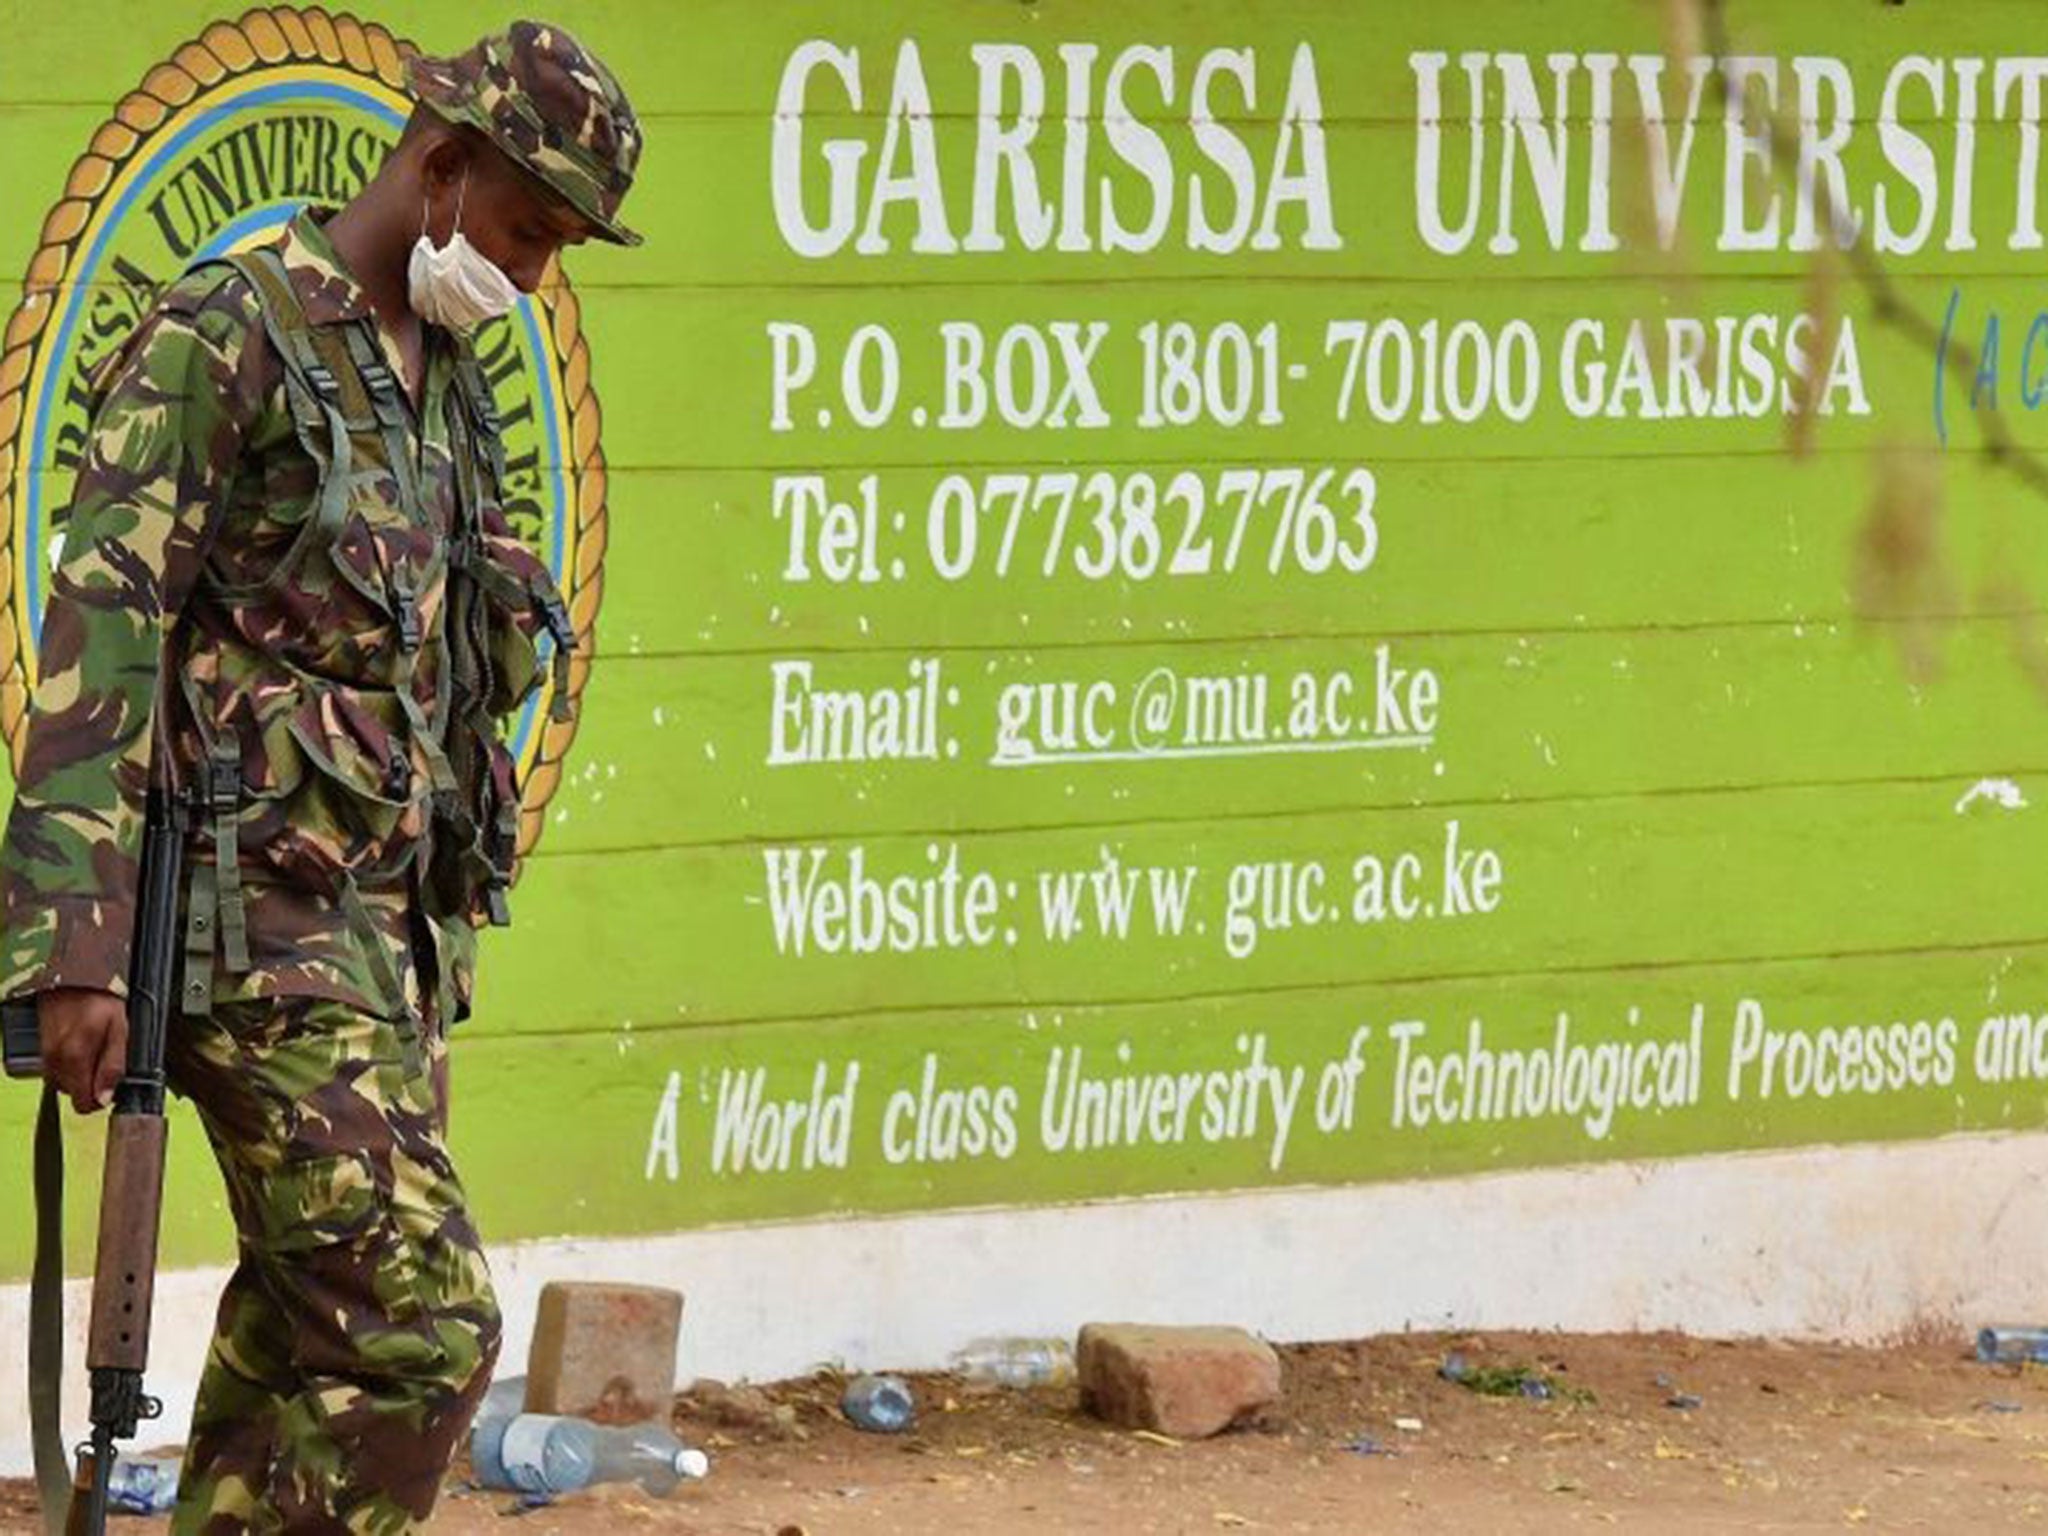 A Kenya Defence forces soldier walks past the front entrance of Garissa University College on April 3